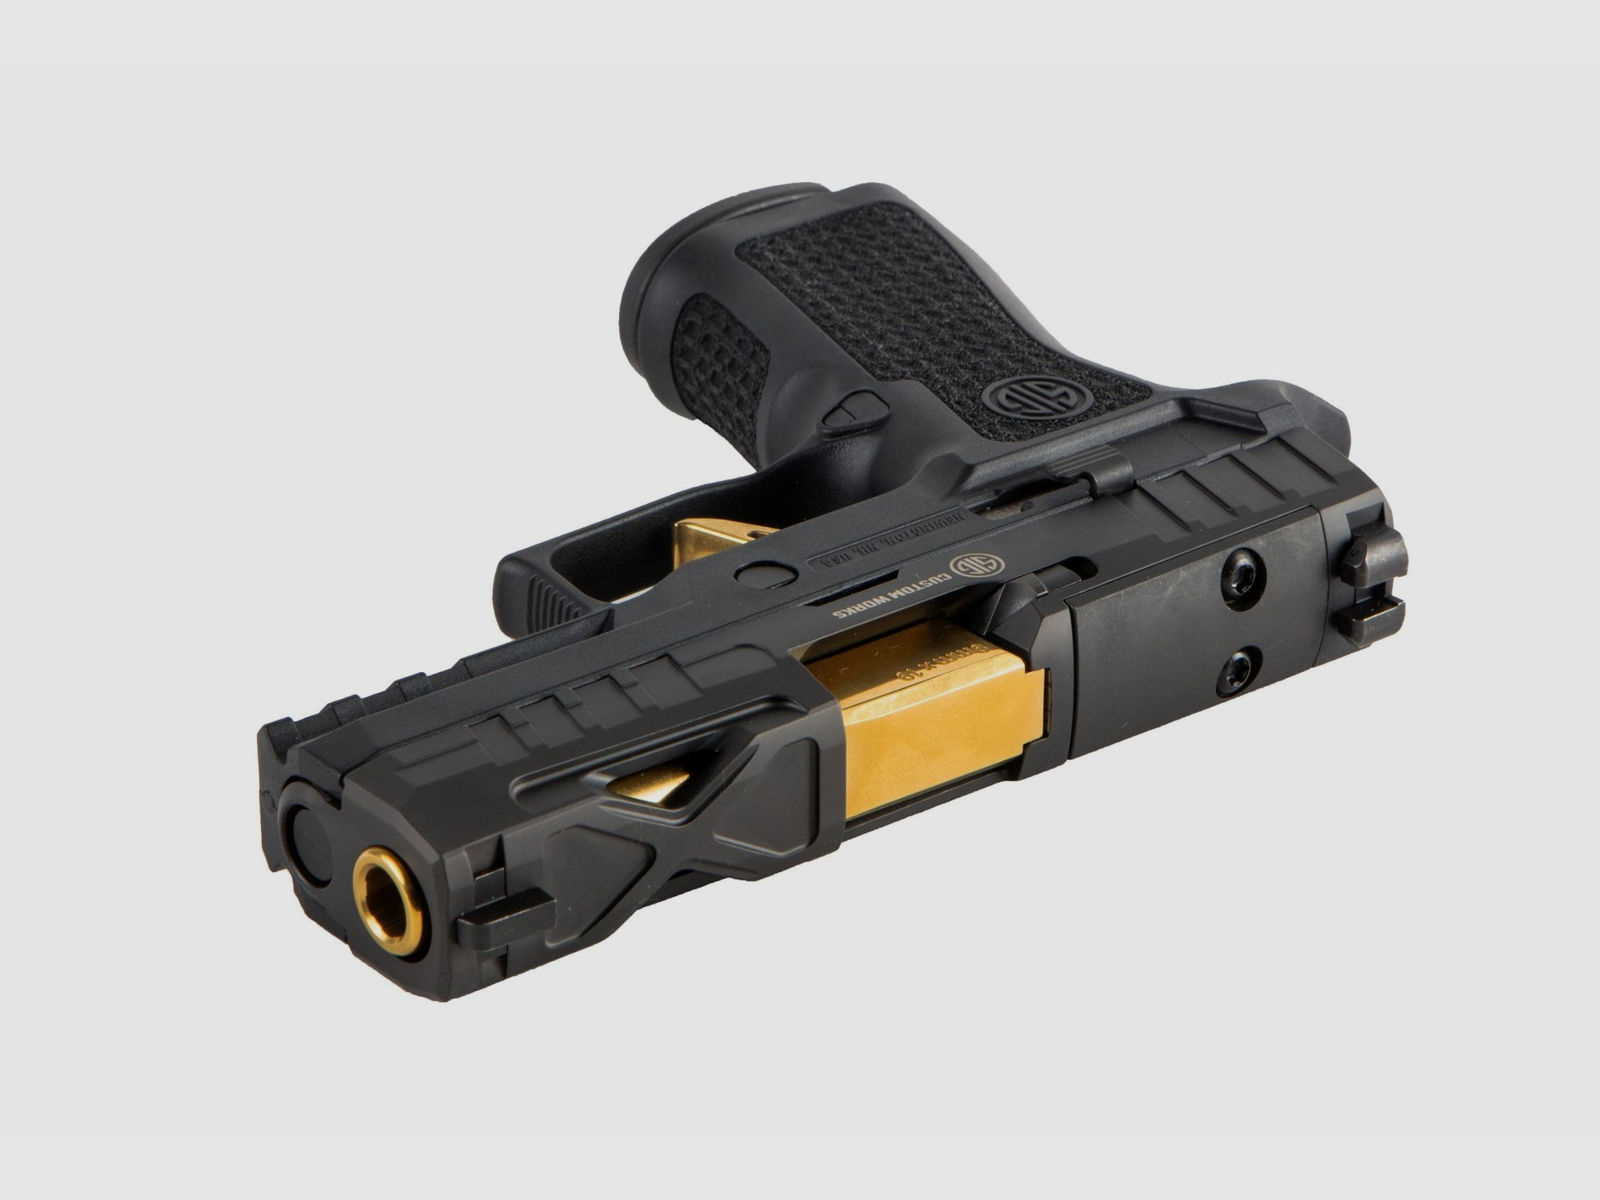 Sig Sauer P320 XCarry Spectre Schwarz 9mm Luger - Selbstladepistole